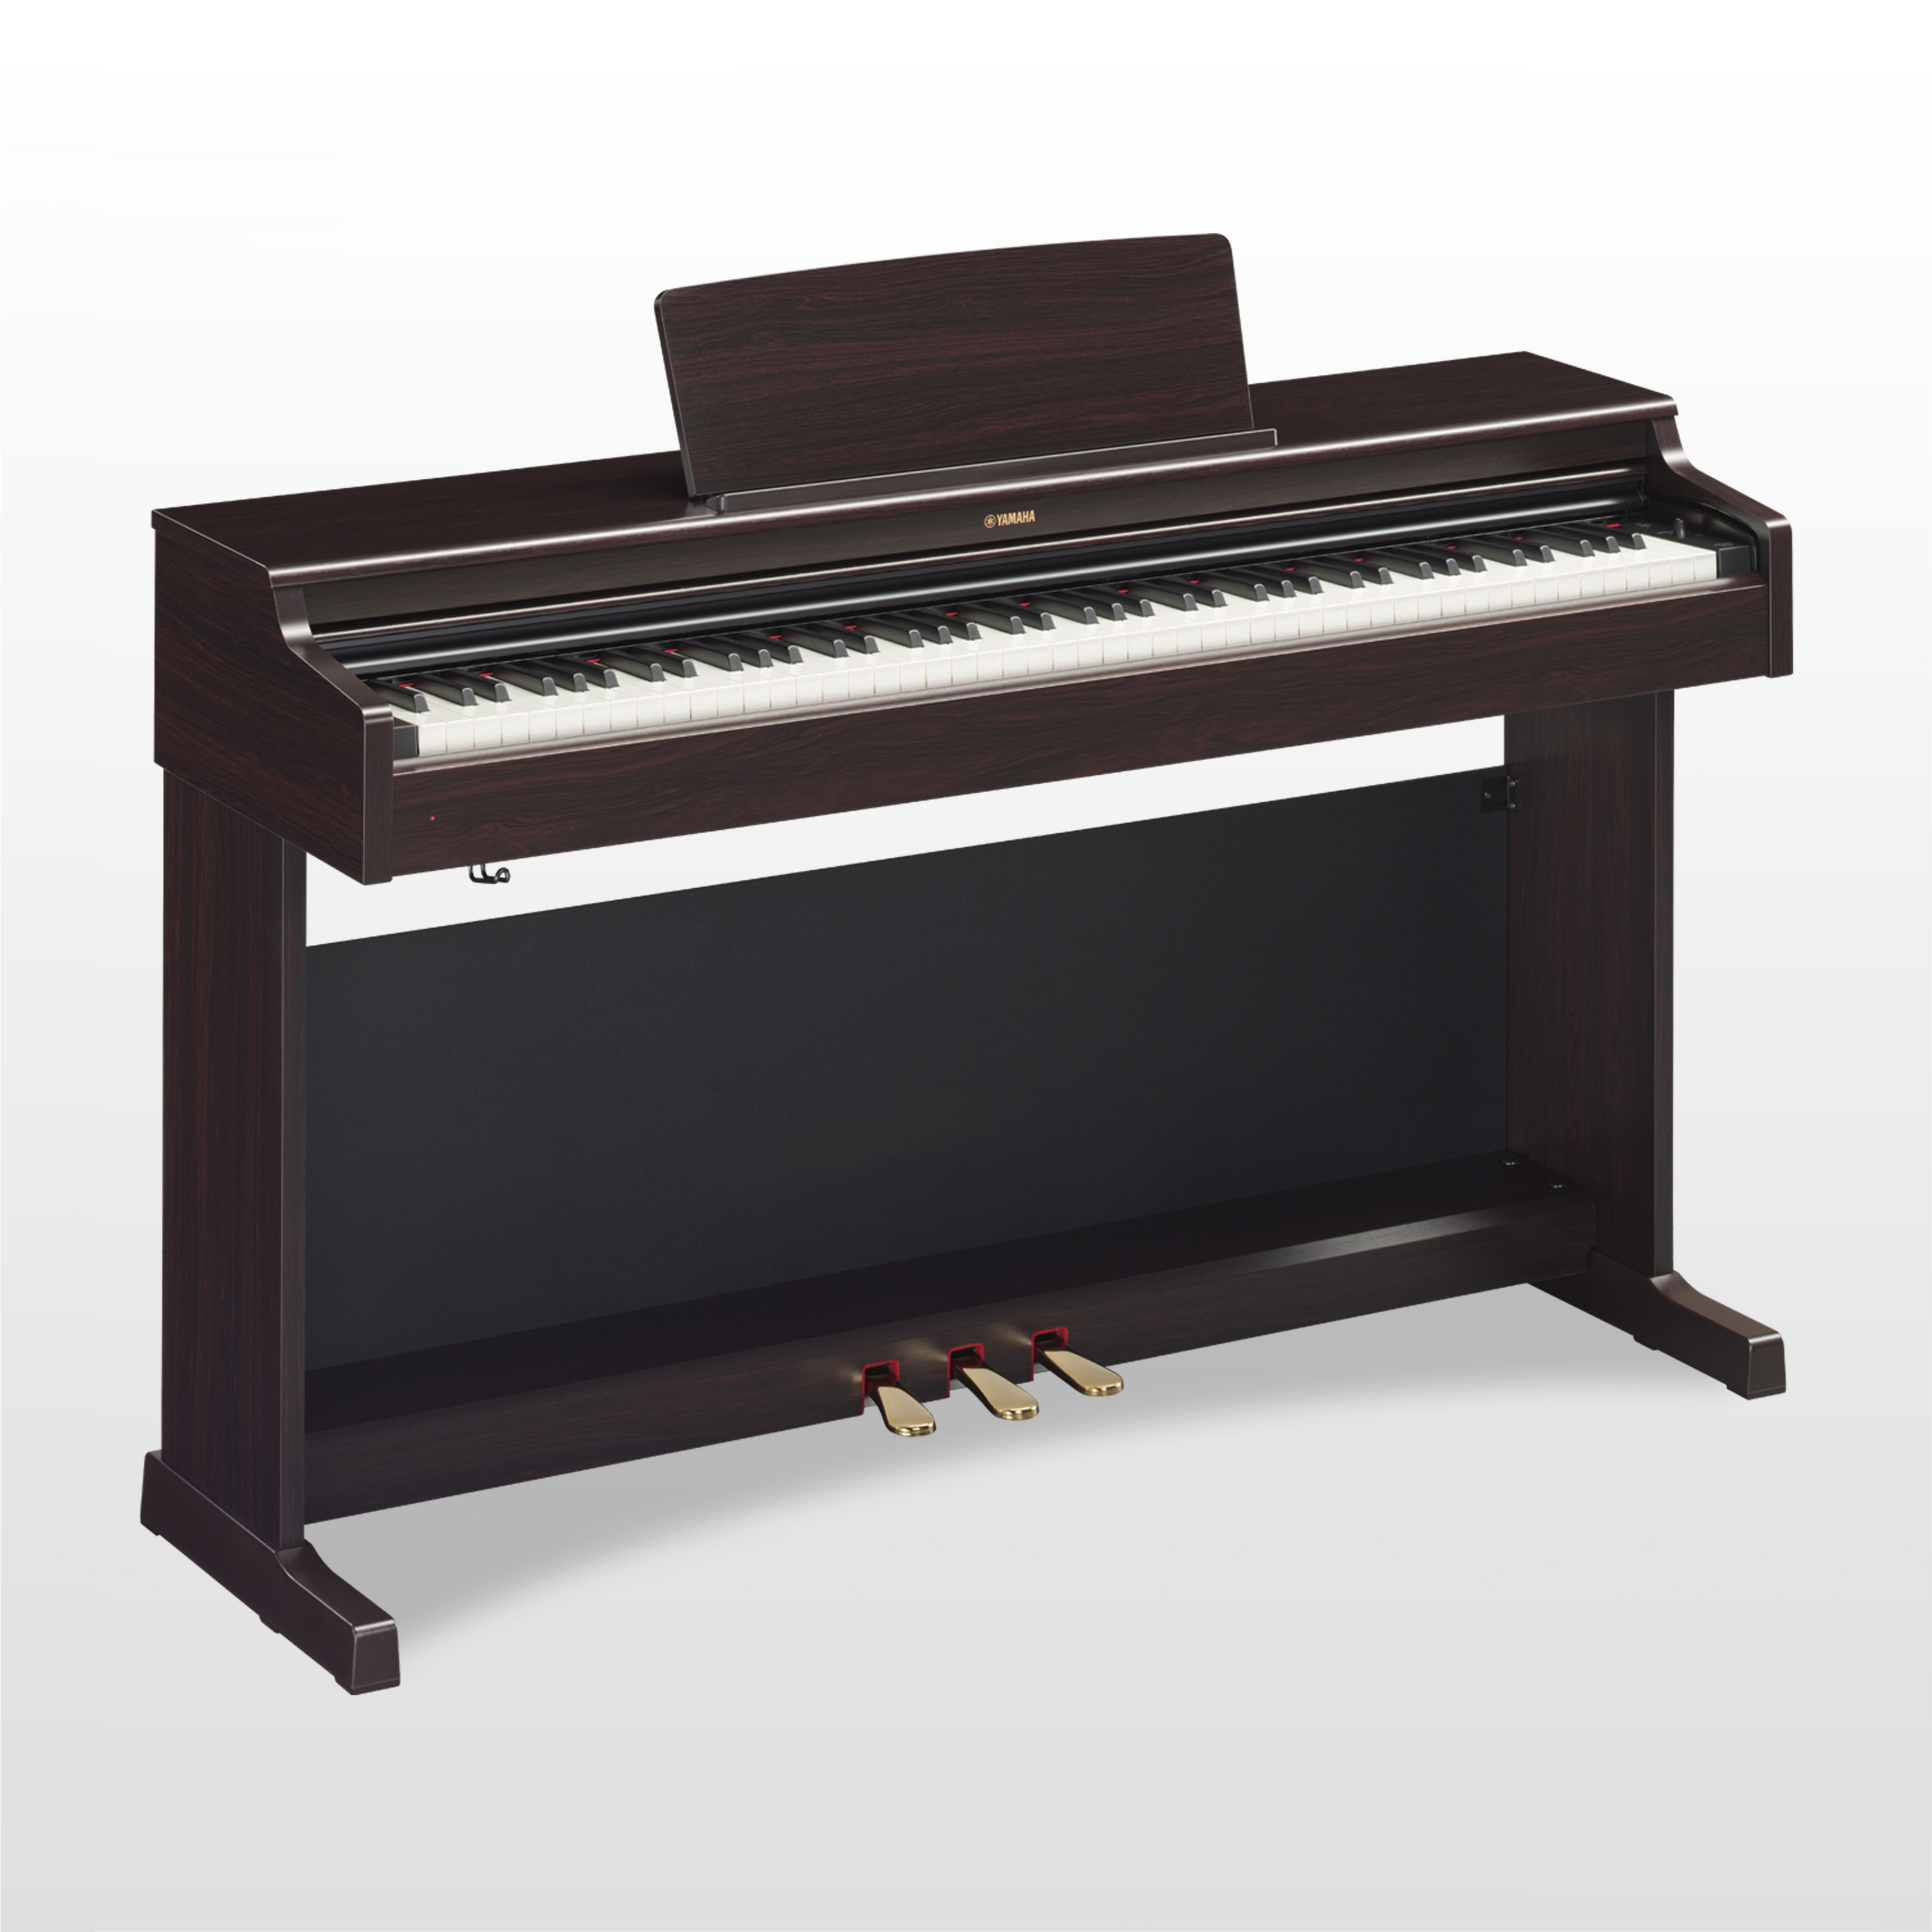 YDP-164 - Downloads - ARIUS - Pianos - Musikinstrumente ...